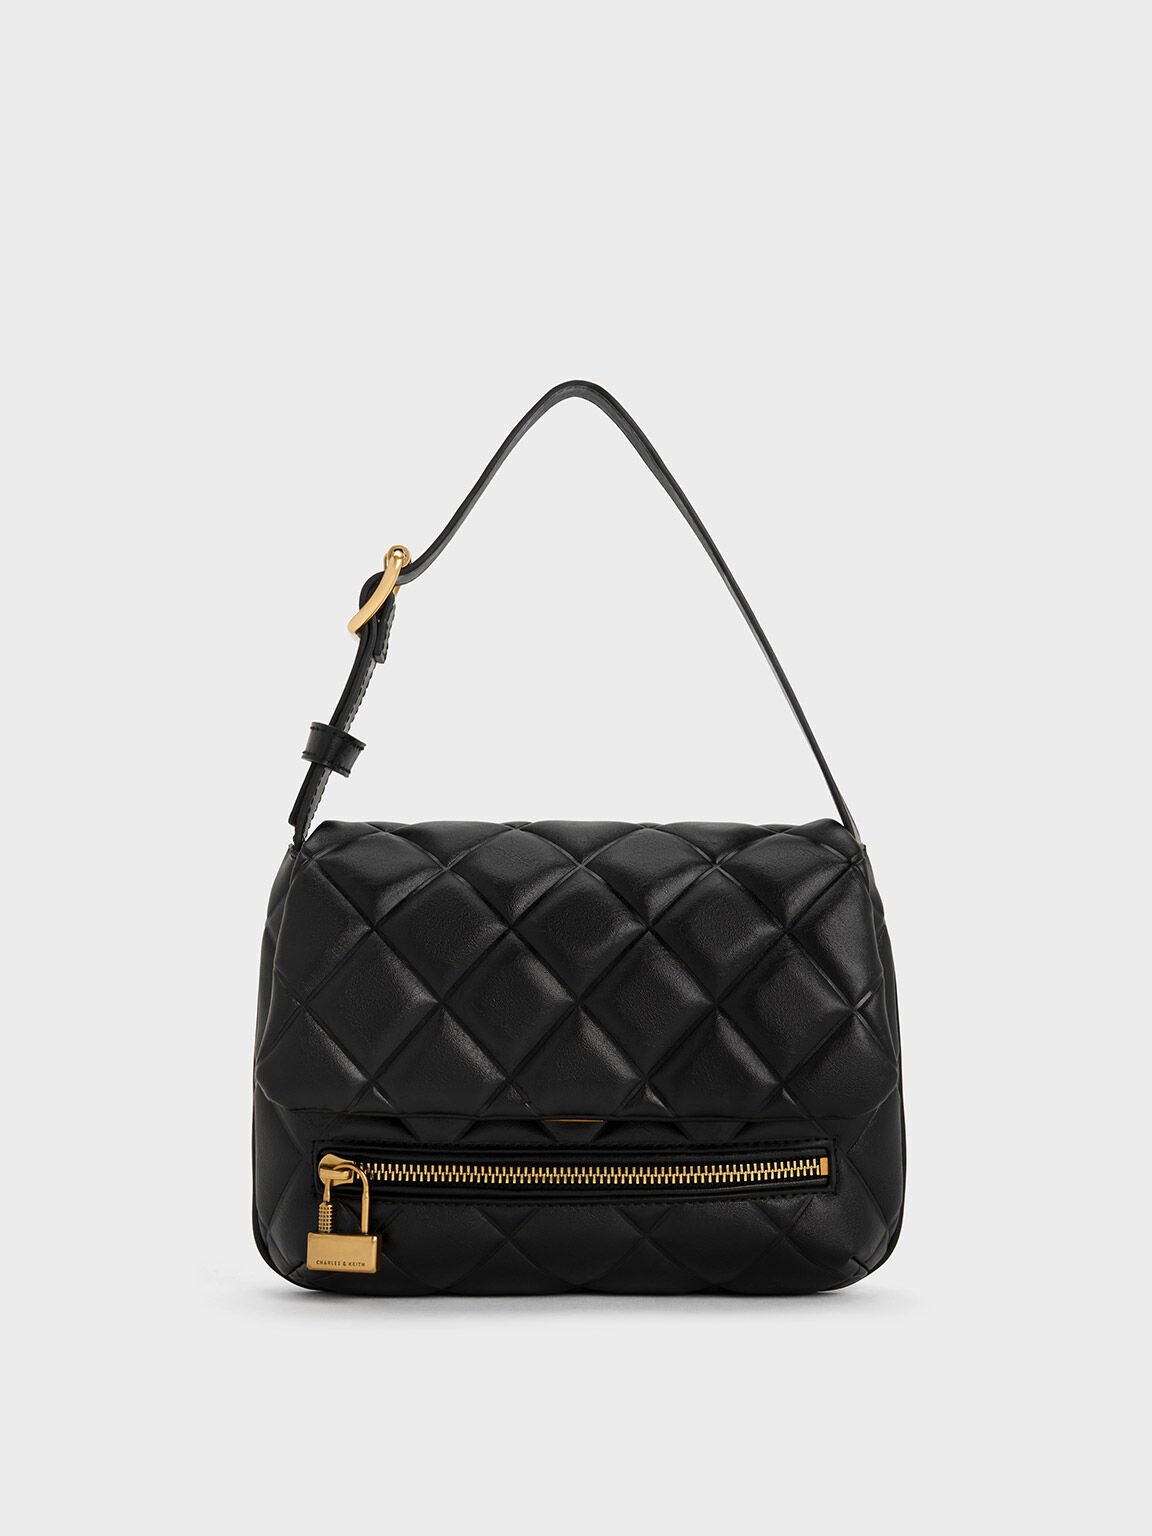 Bags Sale | Handbags, Purses & Wallets - McElhinneys